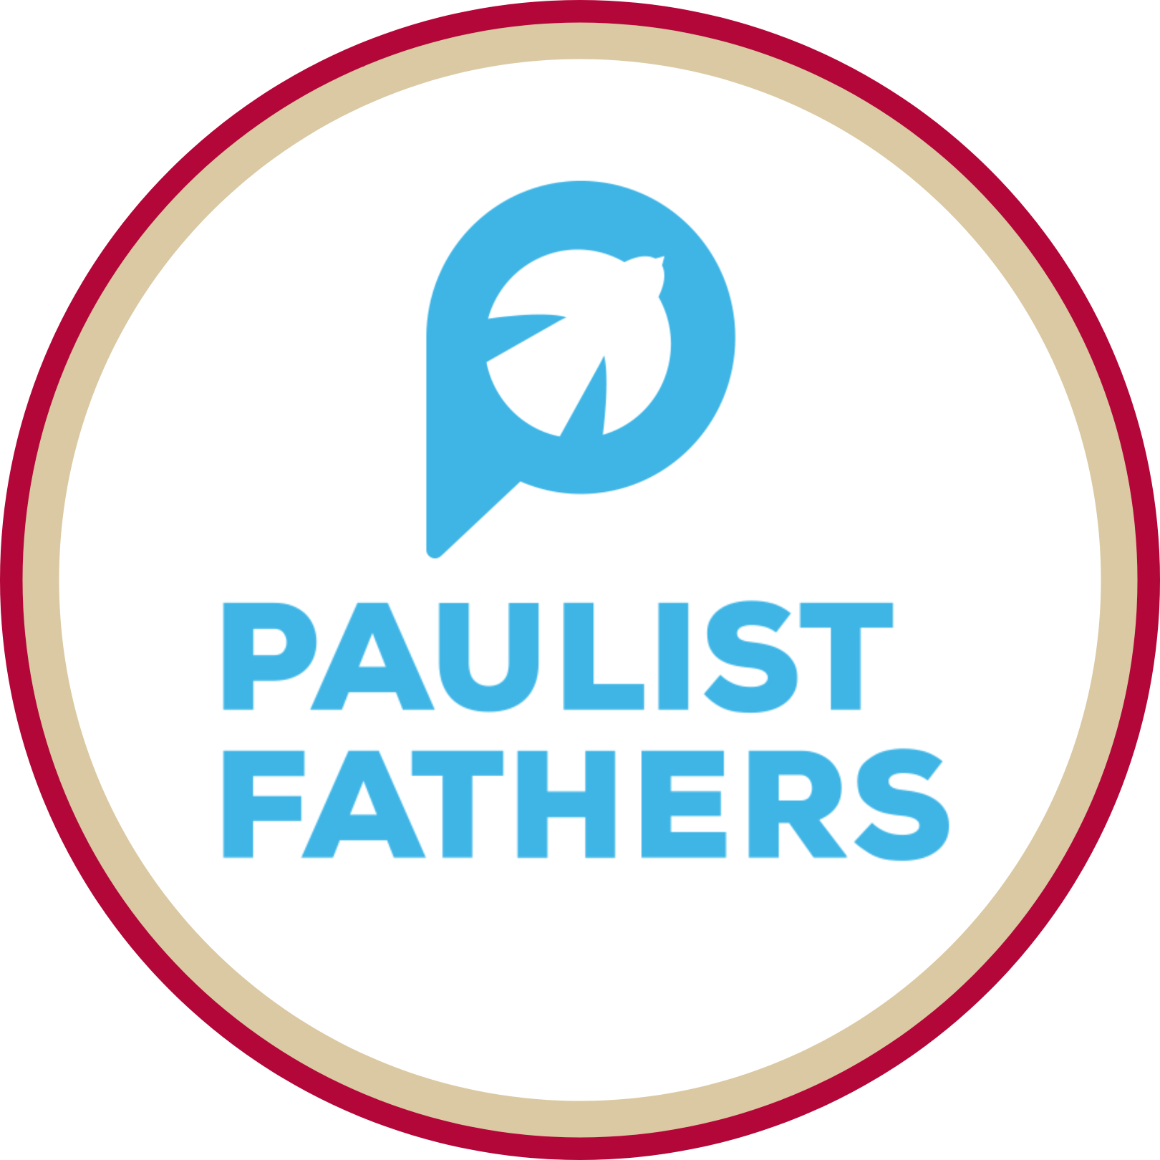 Paulist Fathers logo